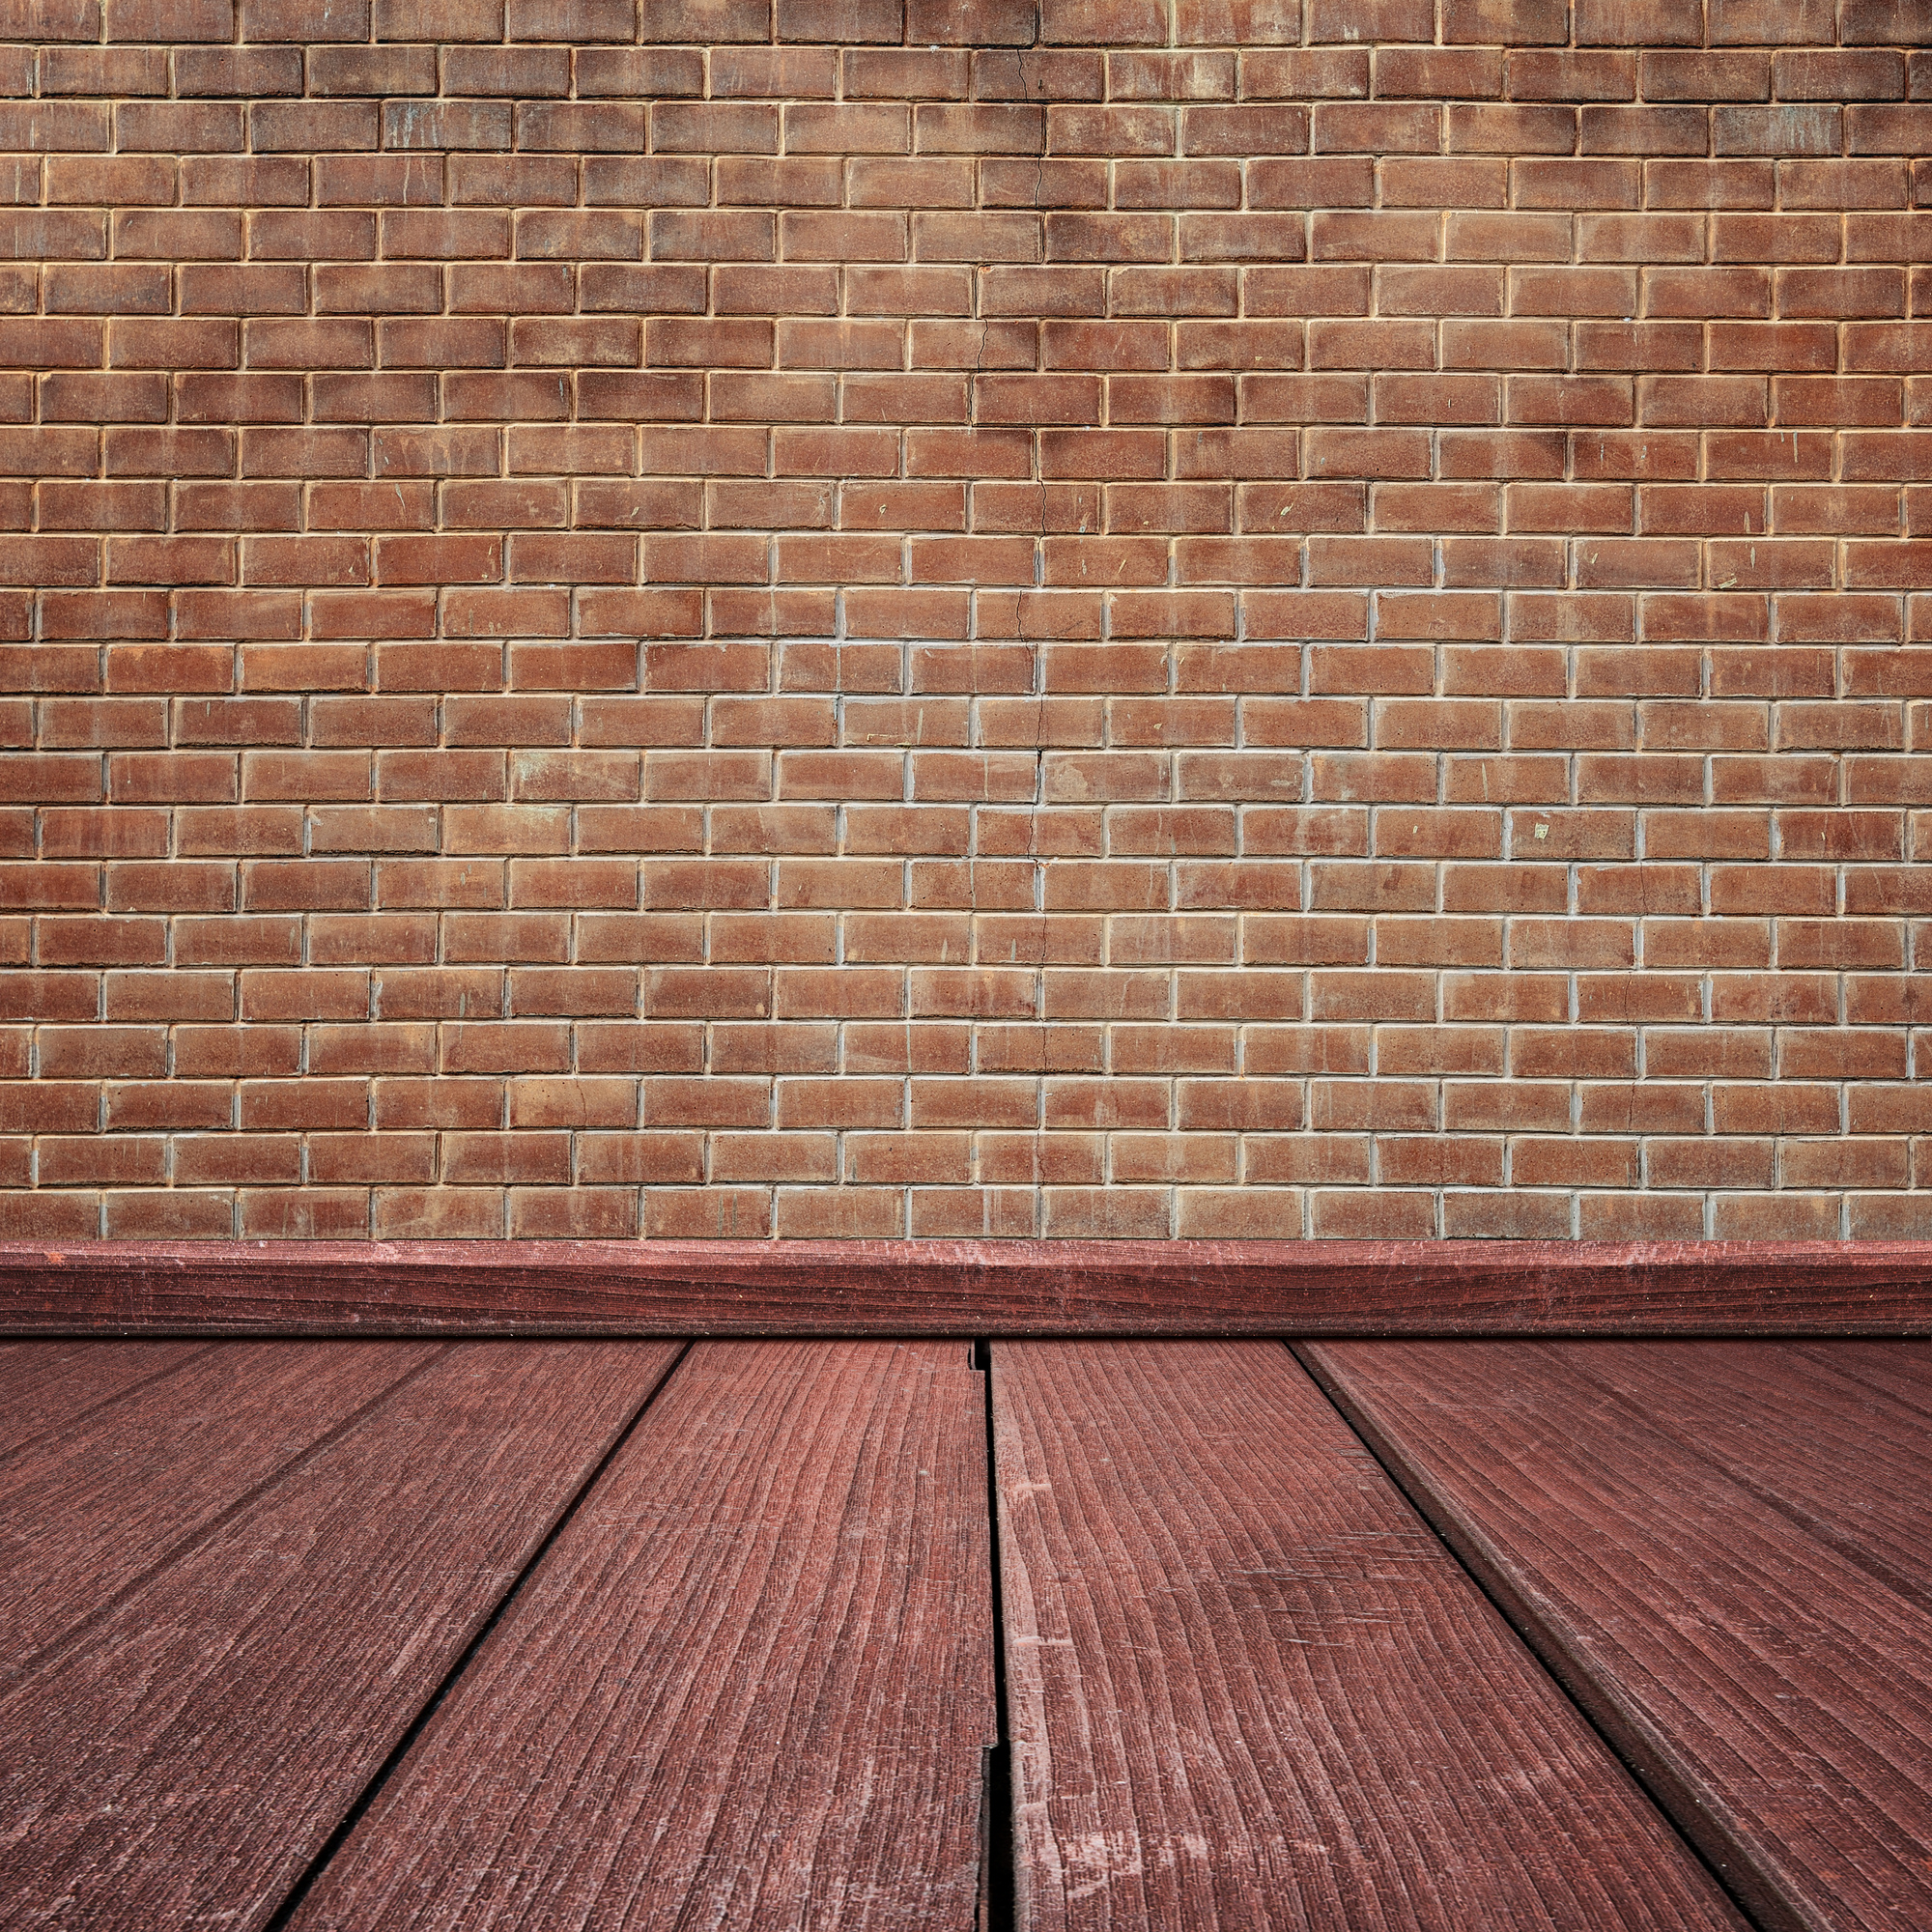 Brick Walls and Wooden Floor Background